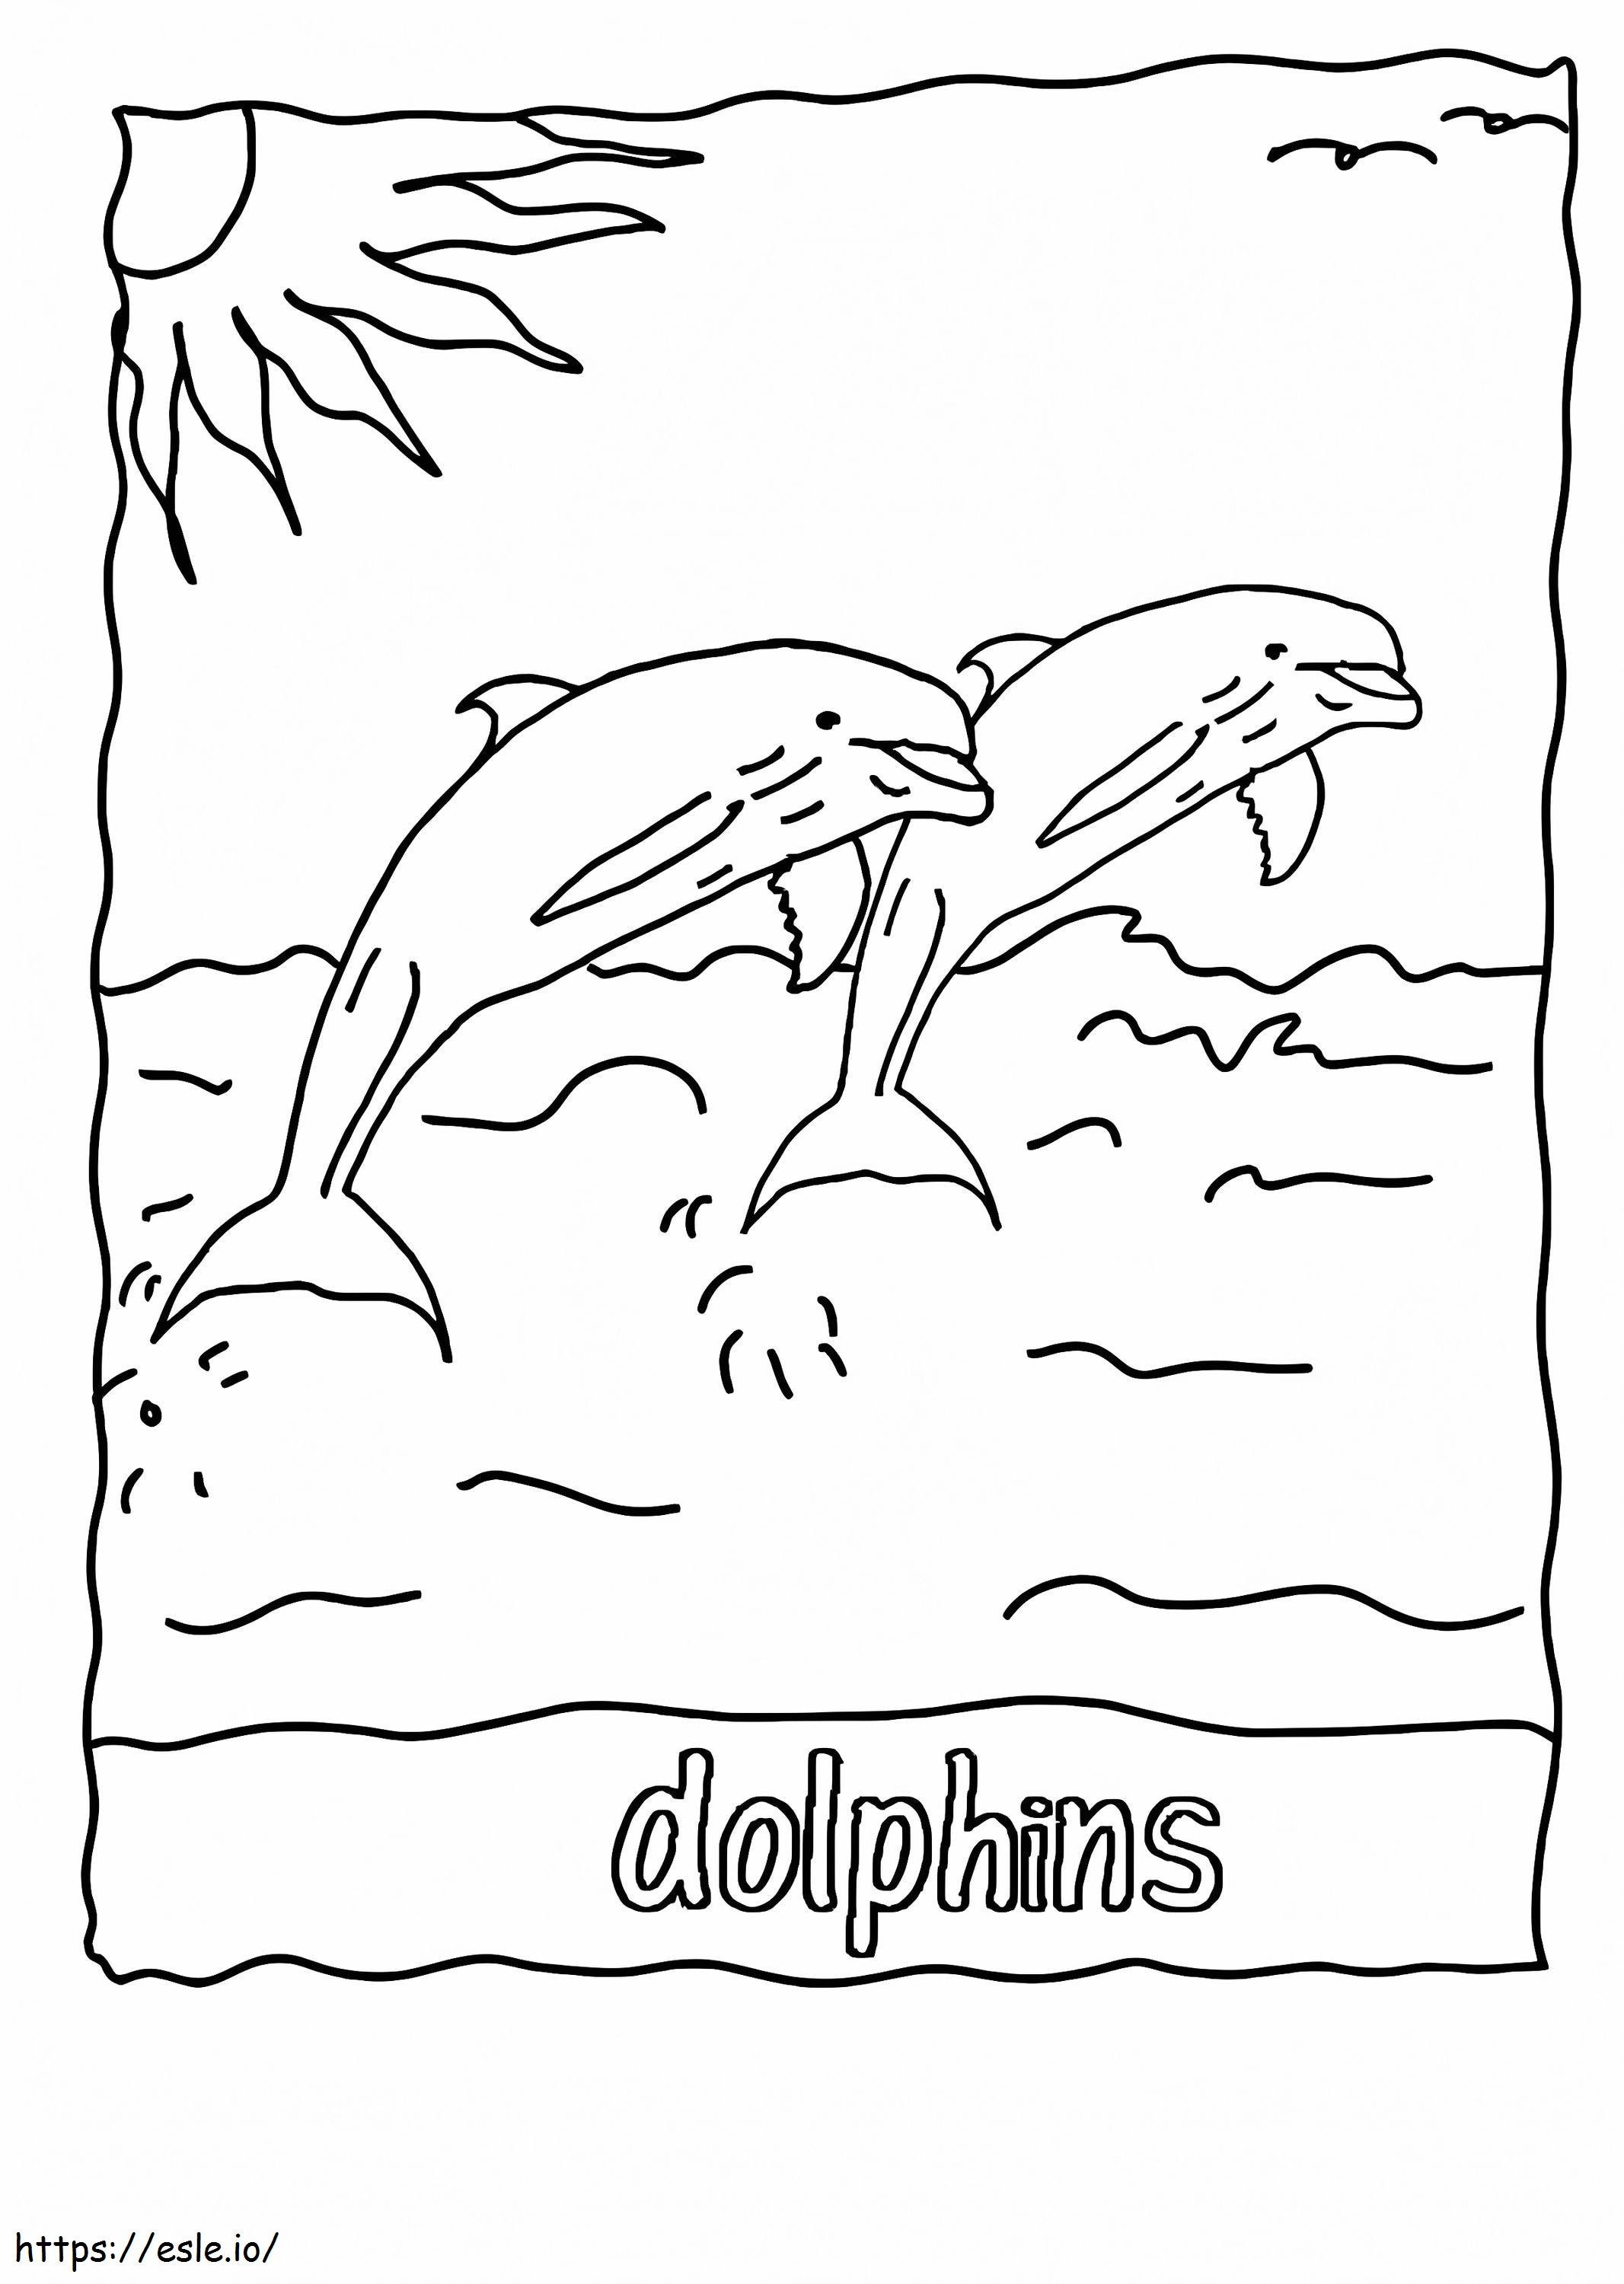 Springende Delfine ausmalbilder